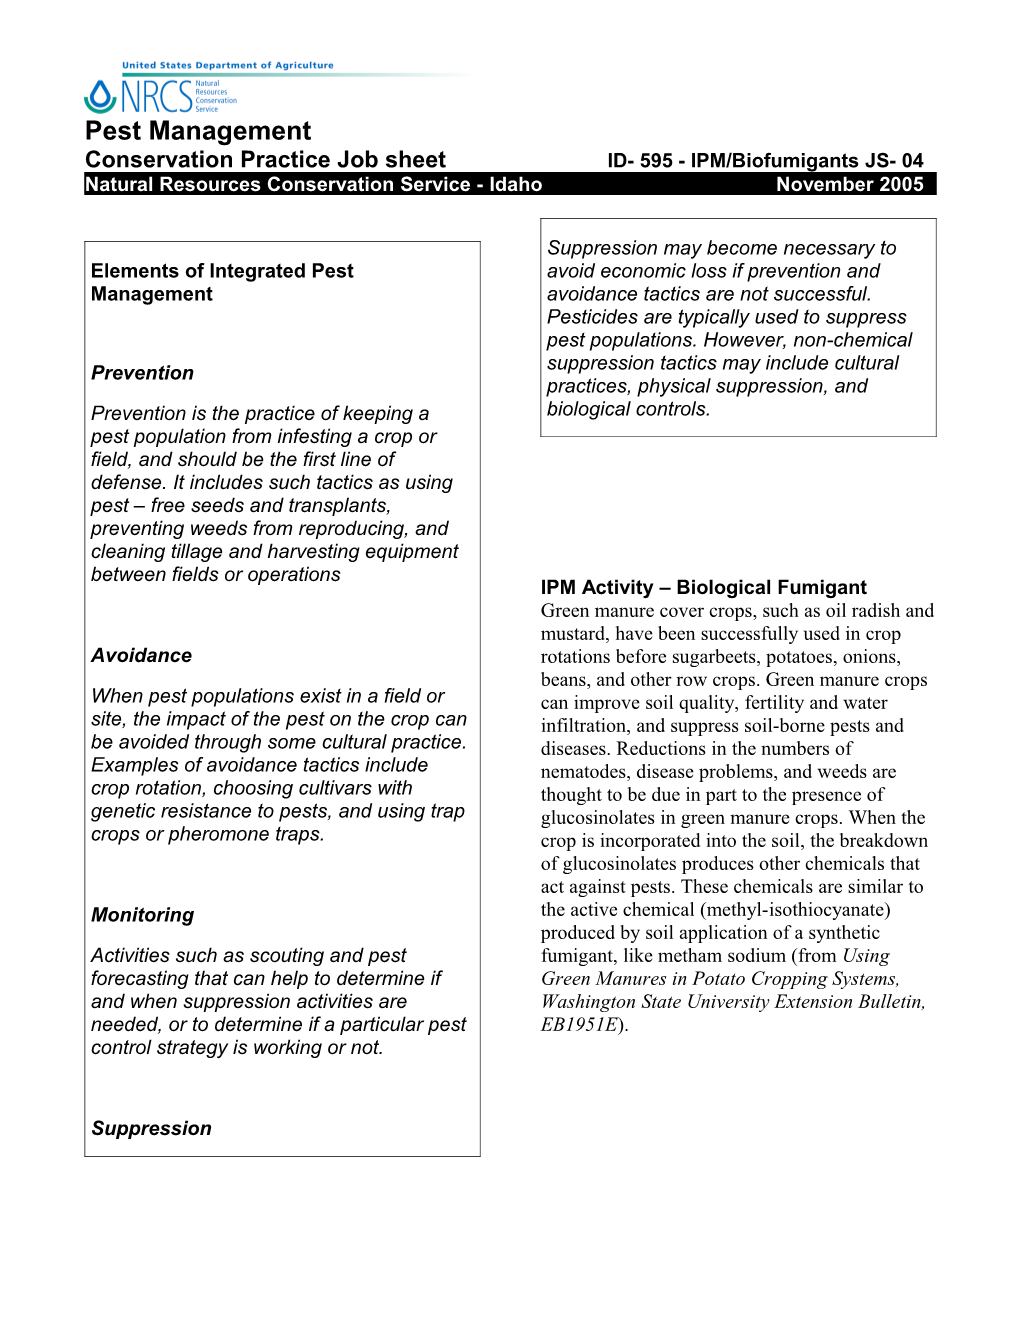 Conservation Practice Job Sheet ID- 595 - IPM/Biofumigants JS- 04